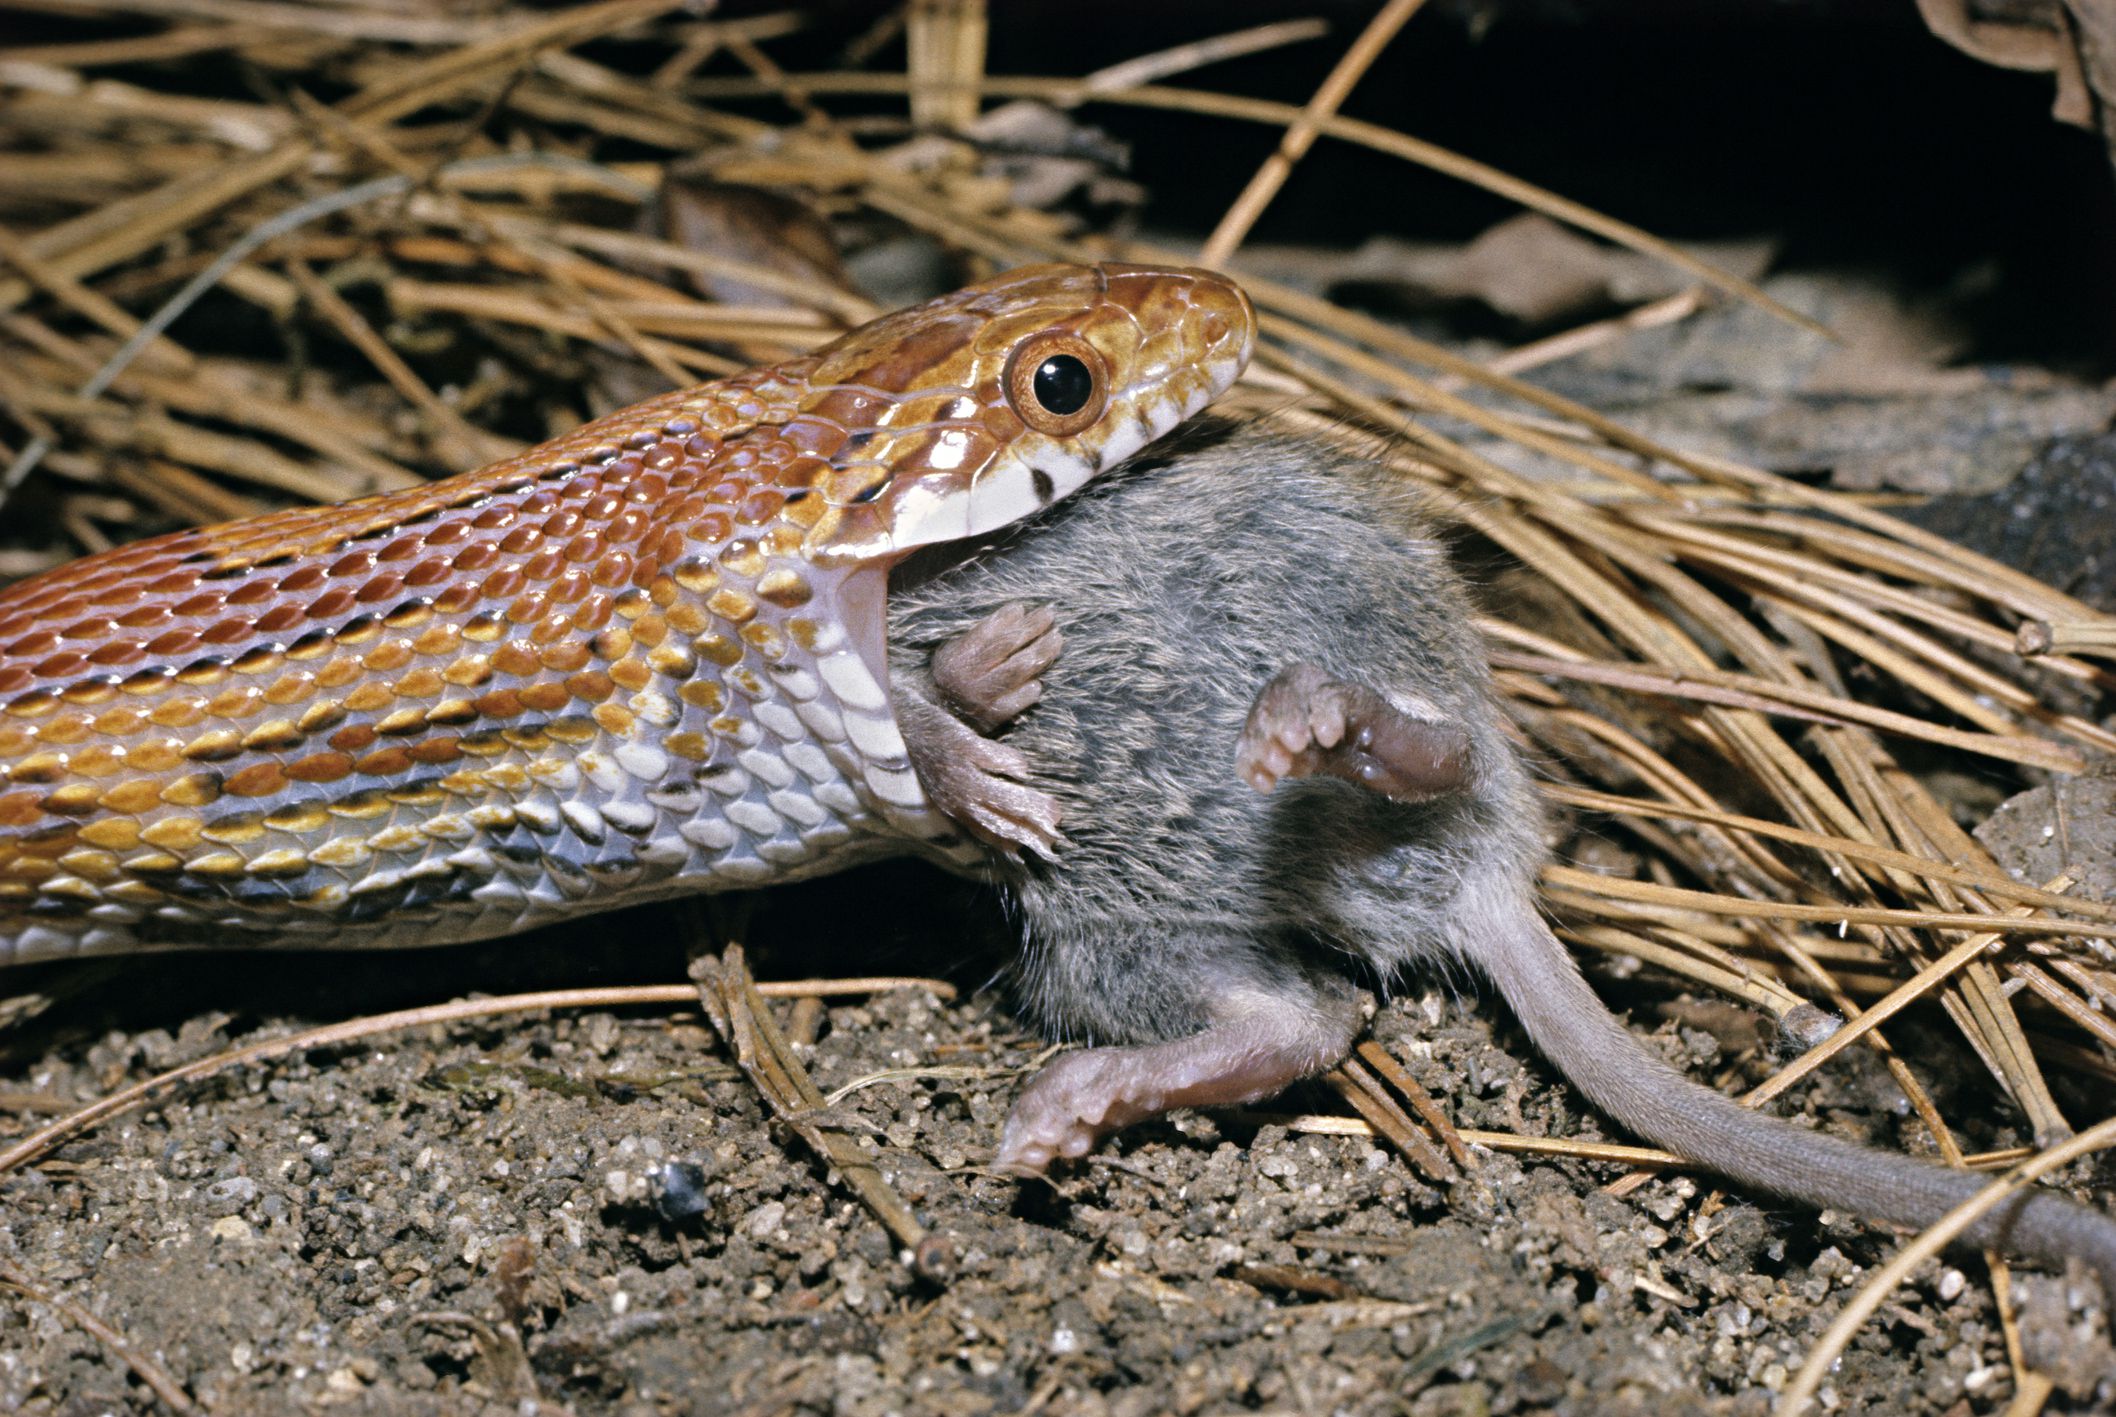 Do All Snakes Eat Mice?